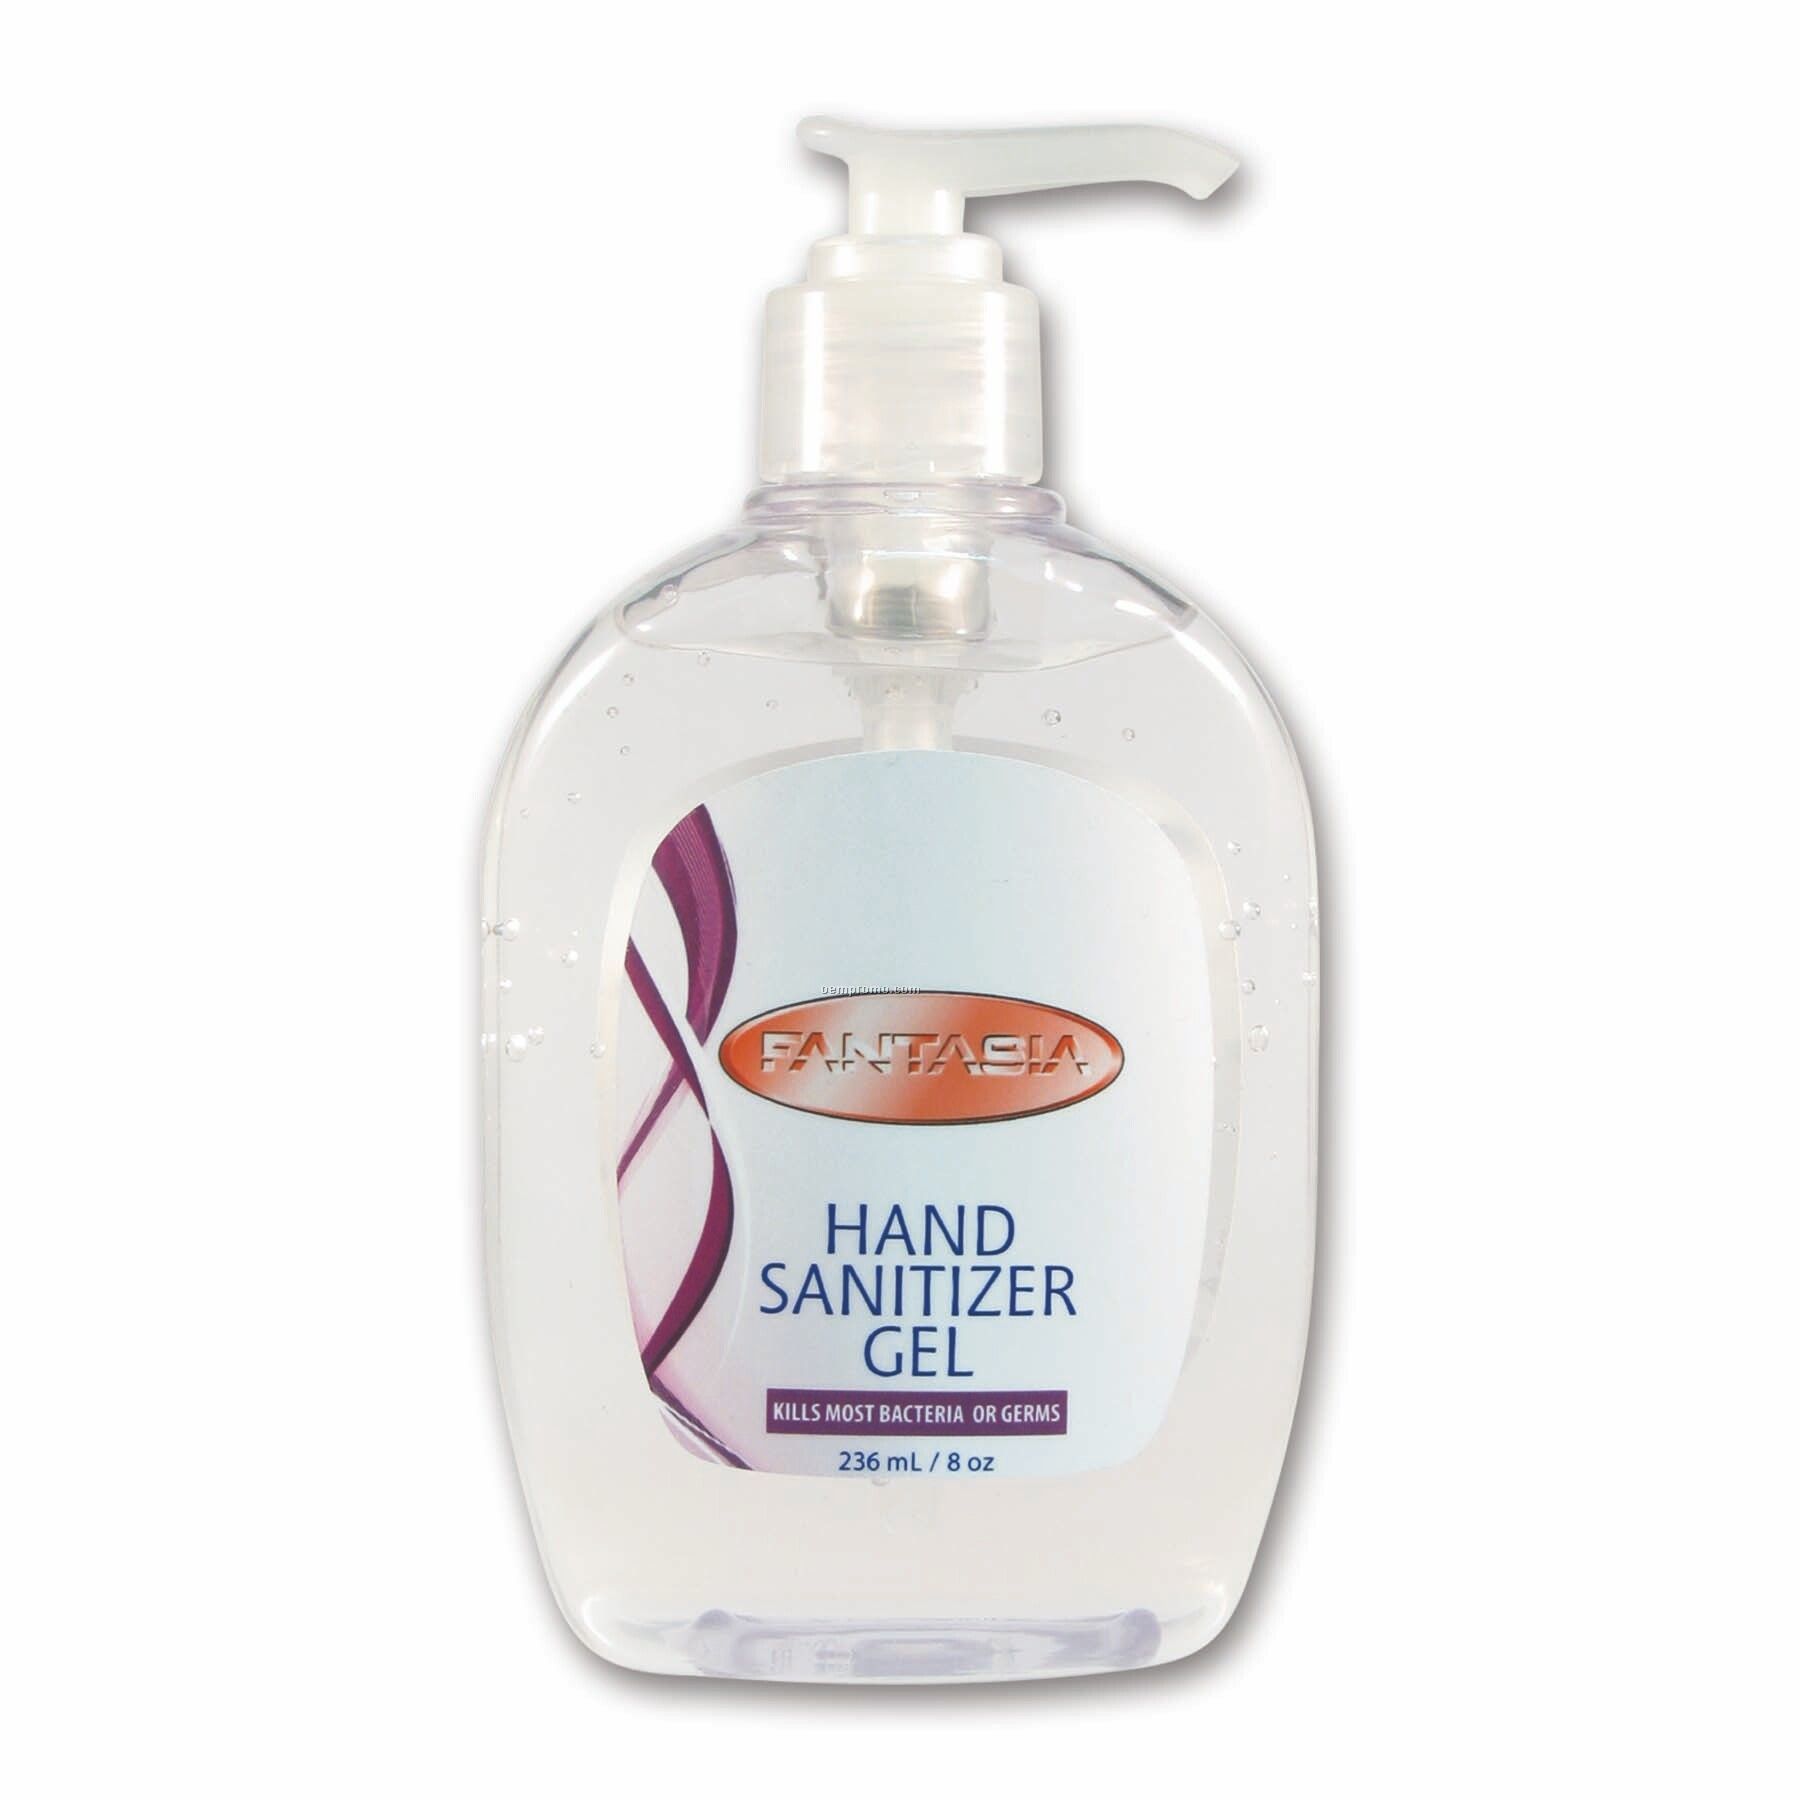 Fantasia Gel Hand Sanitizer